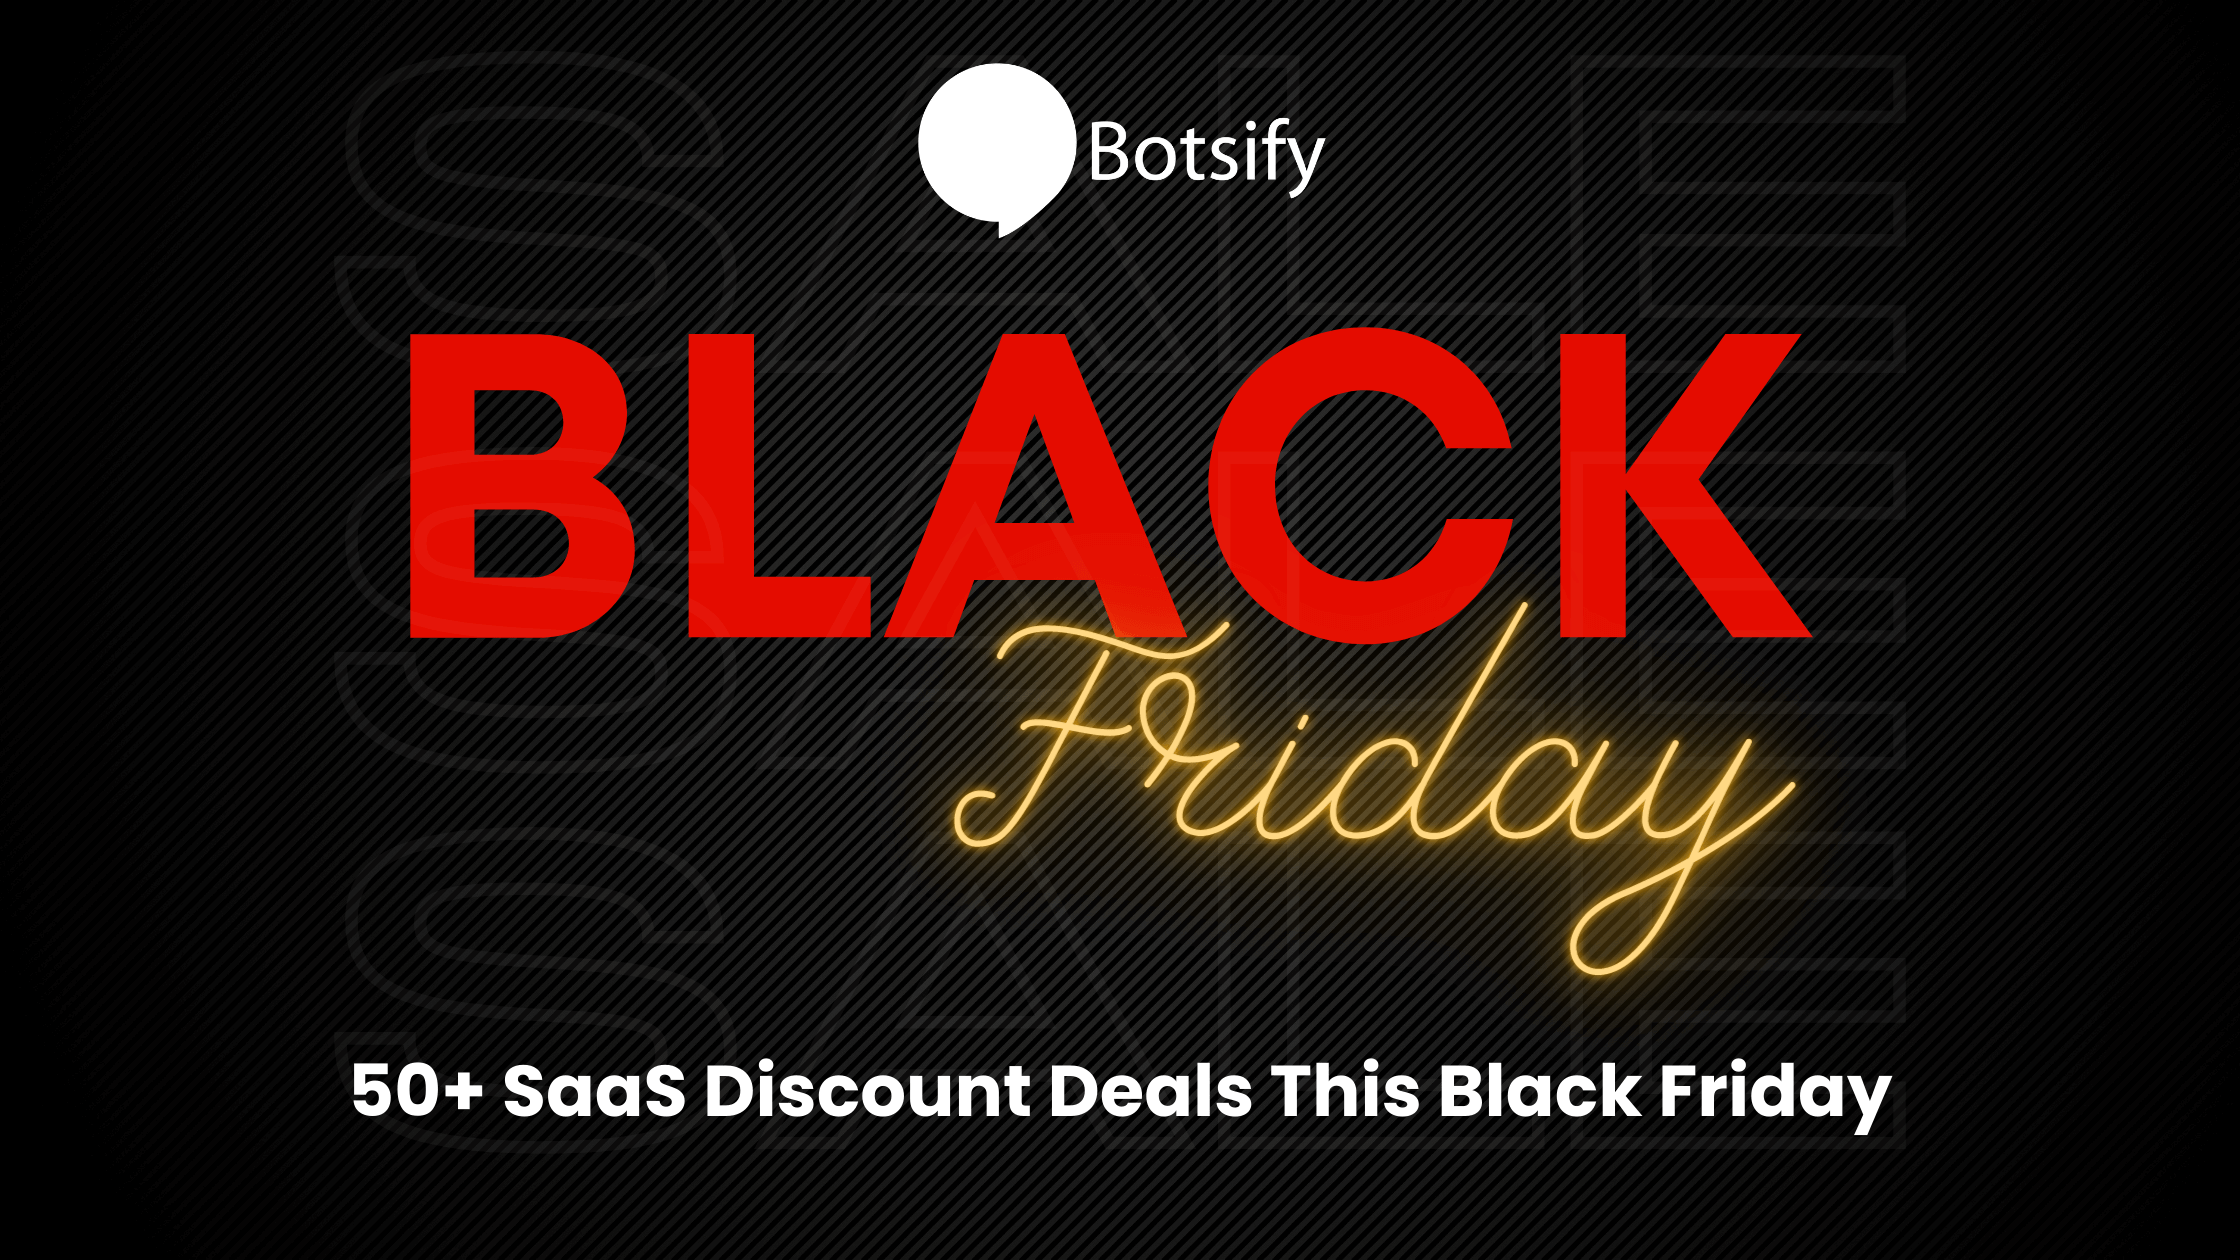 Botsify Black Friday deal